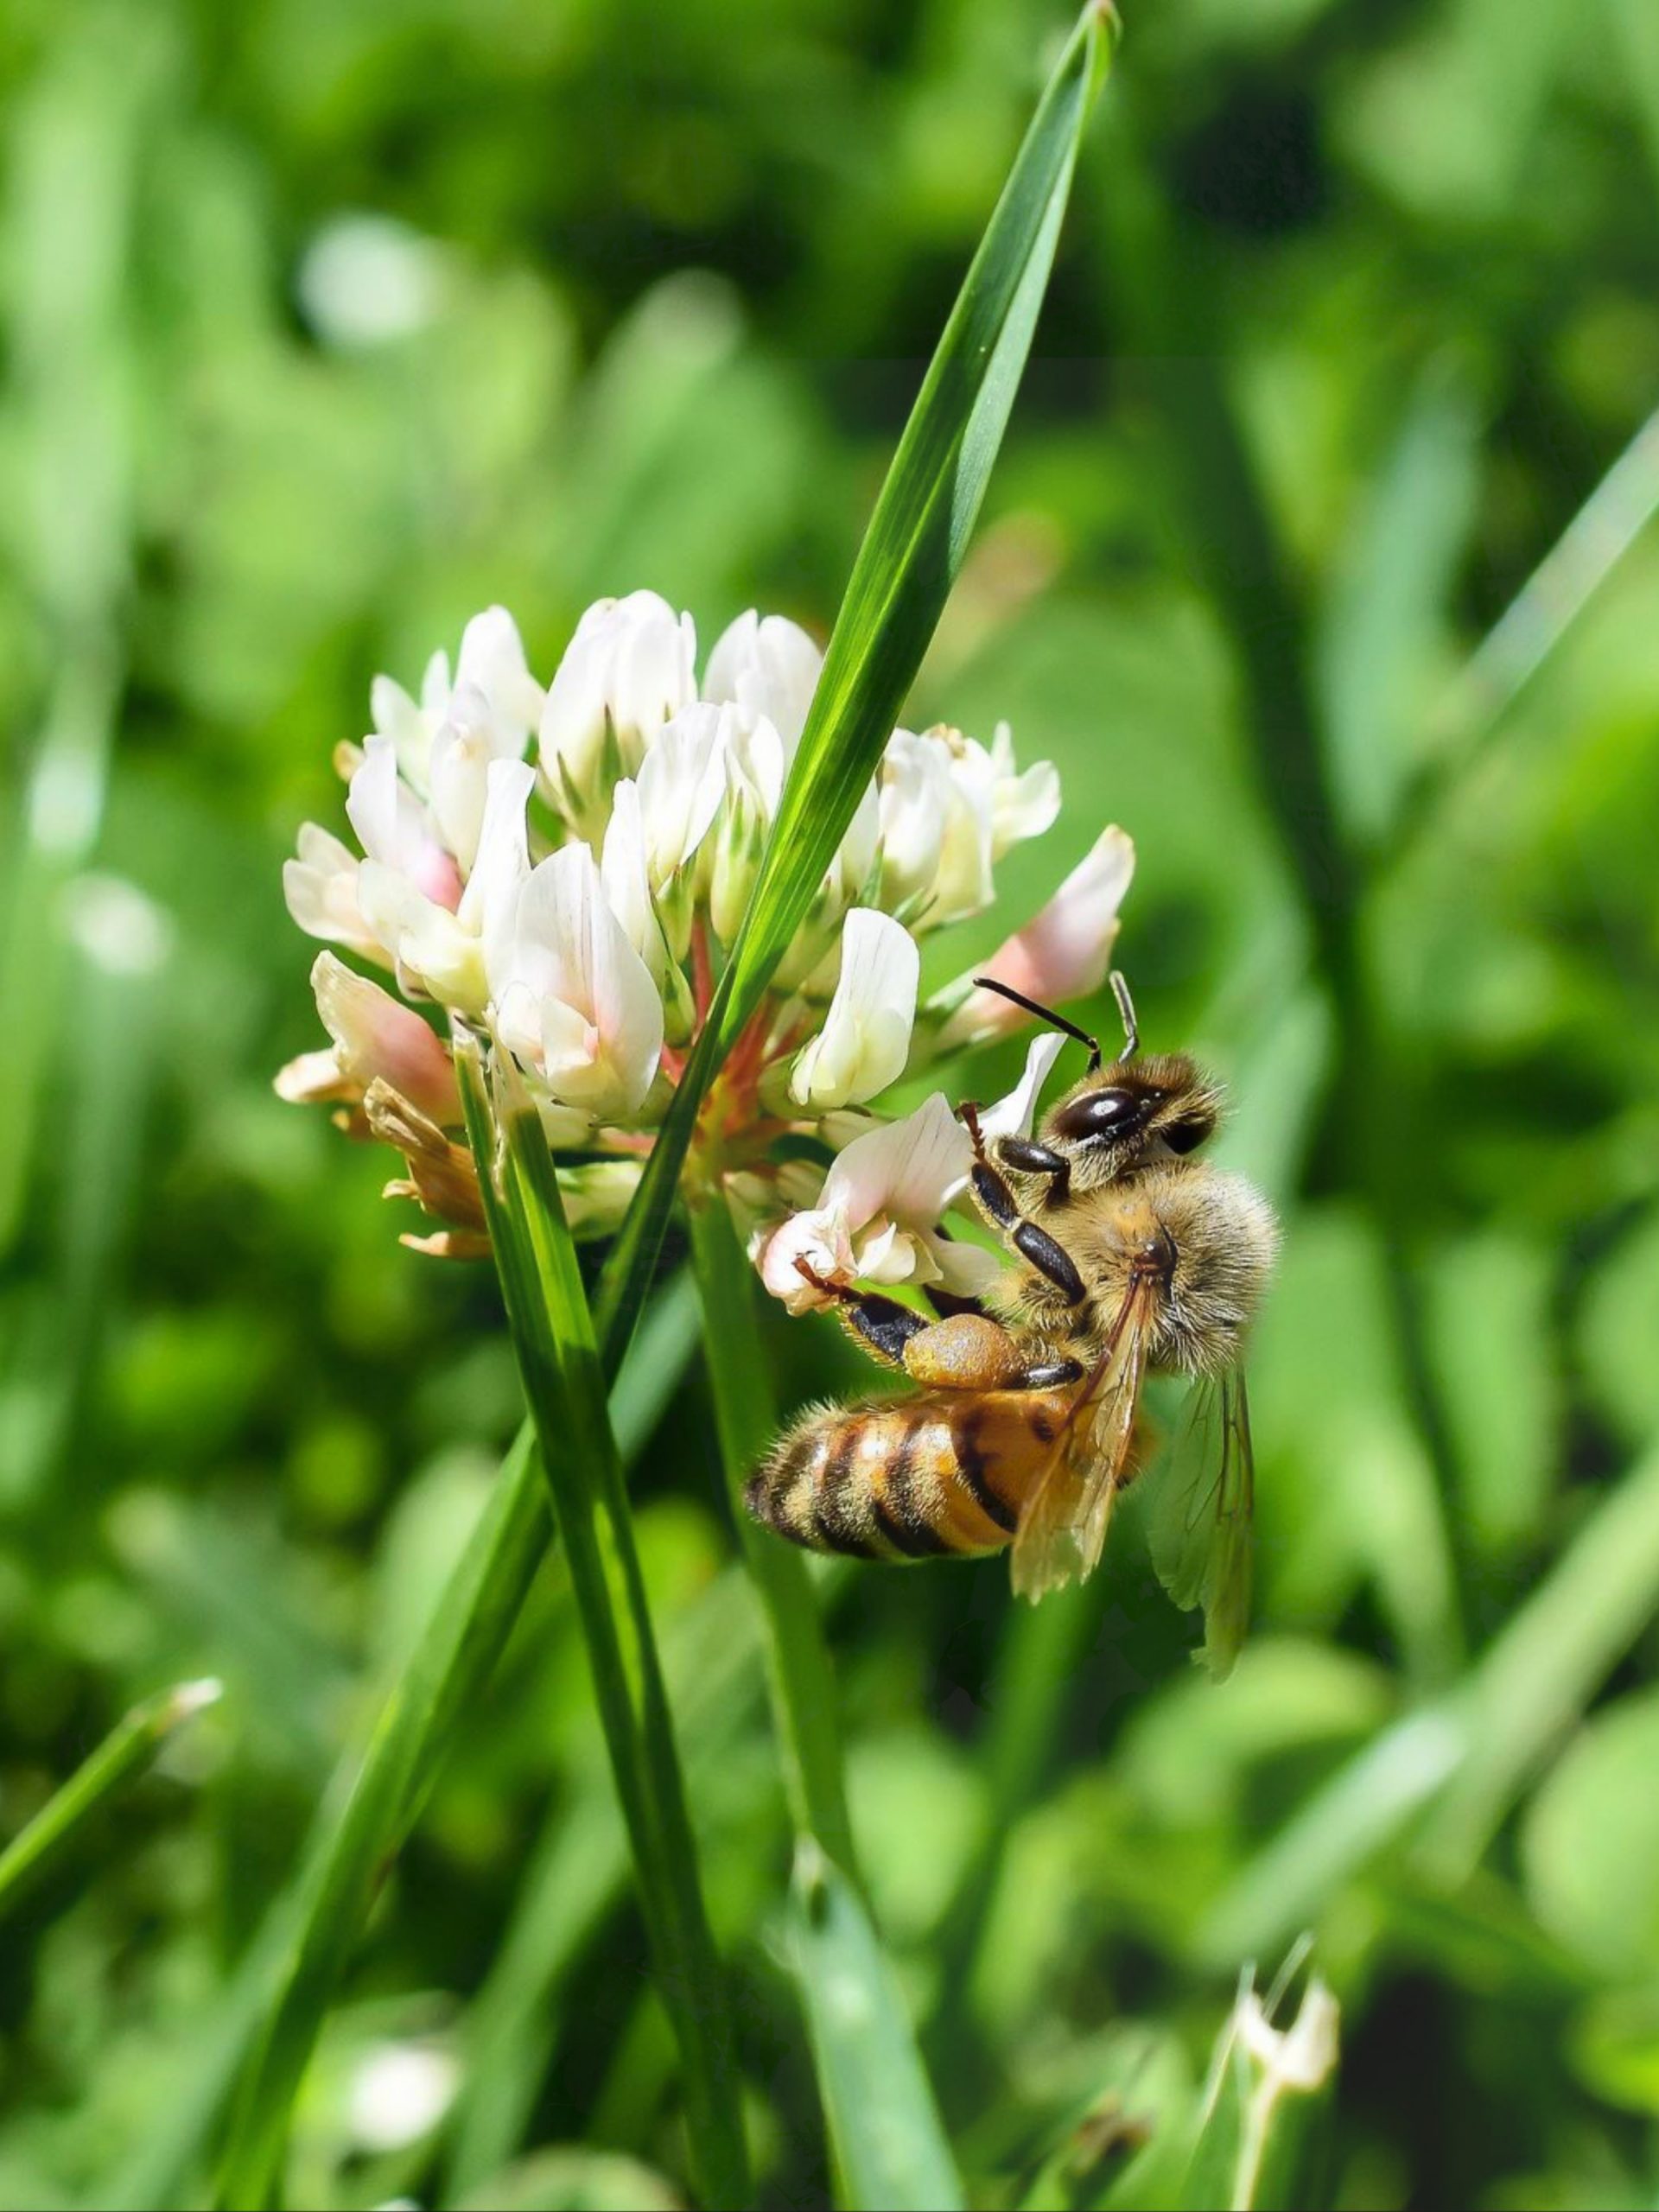 A honeybee on a flower